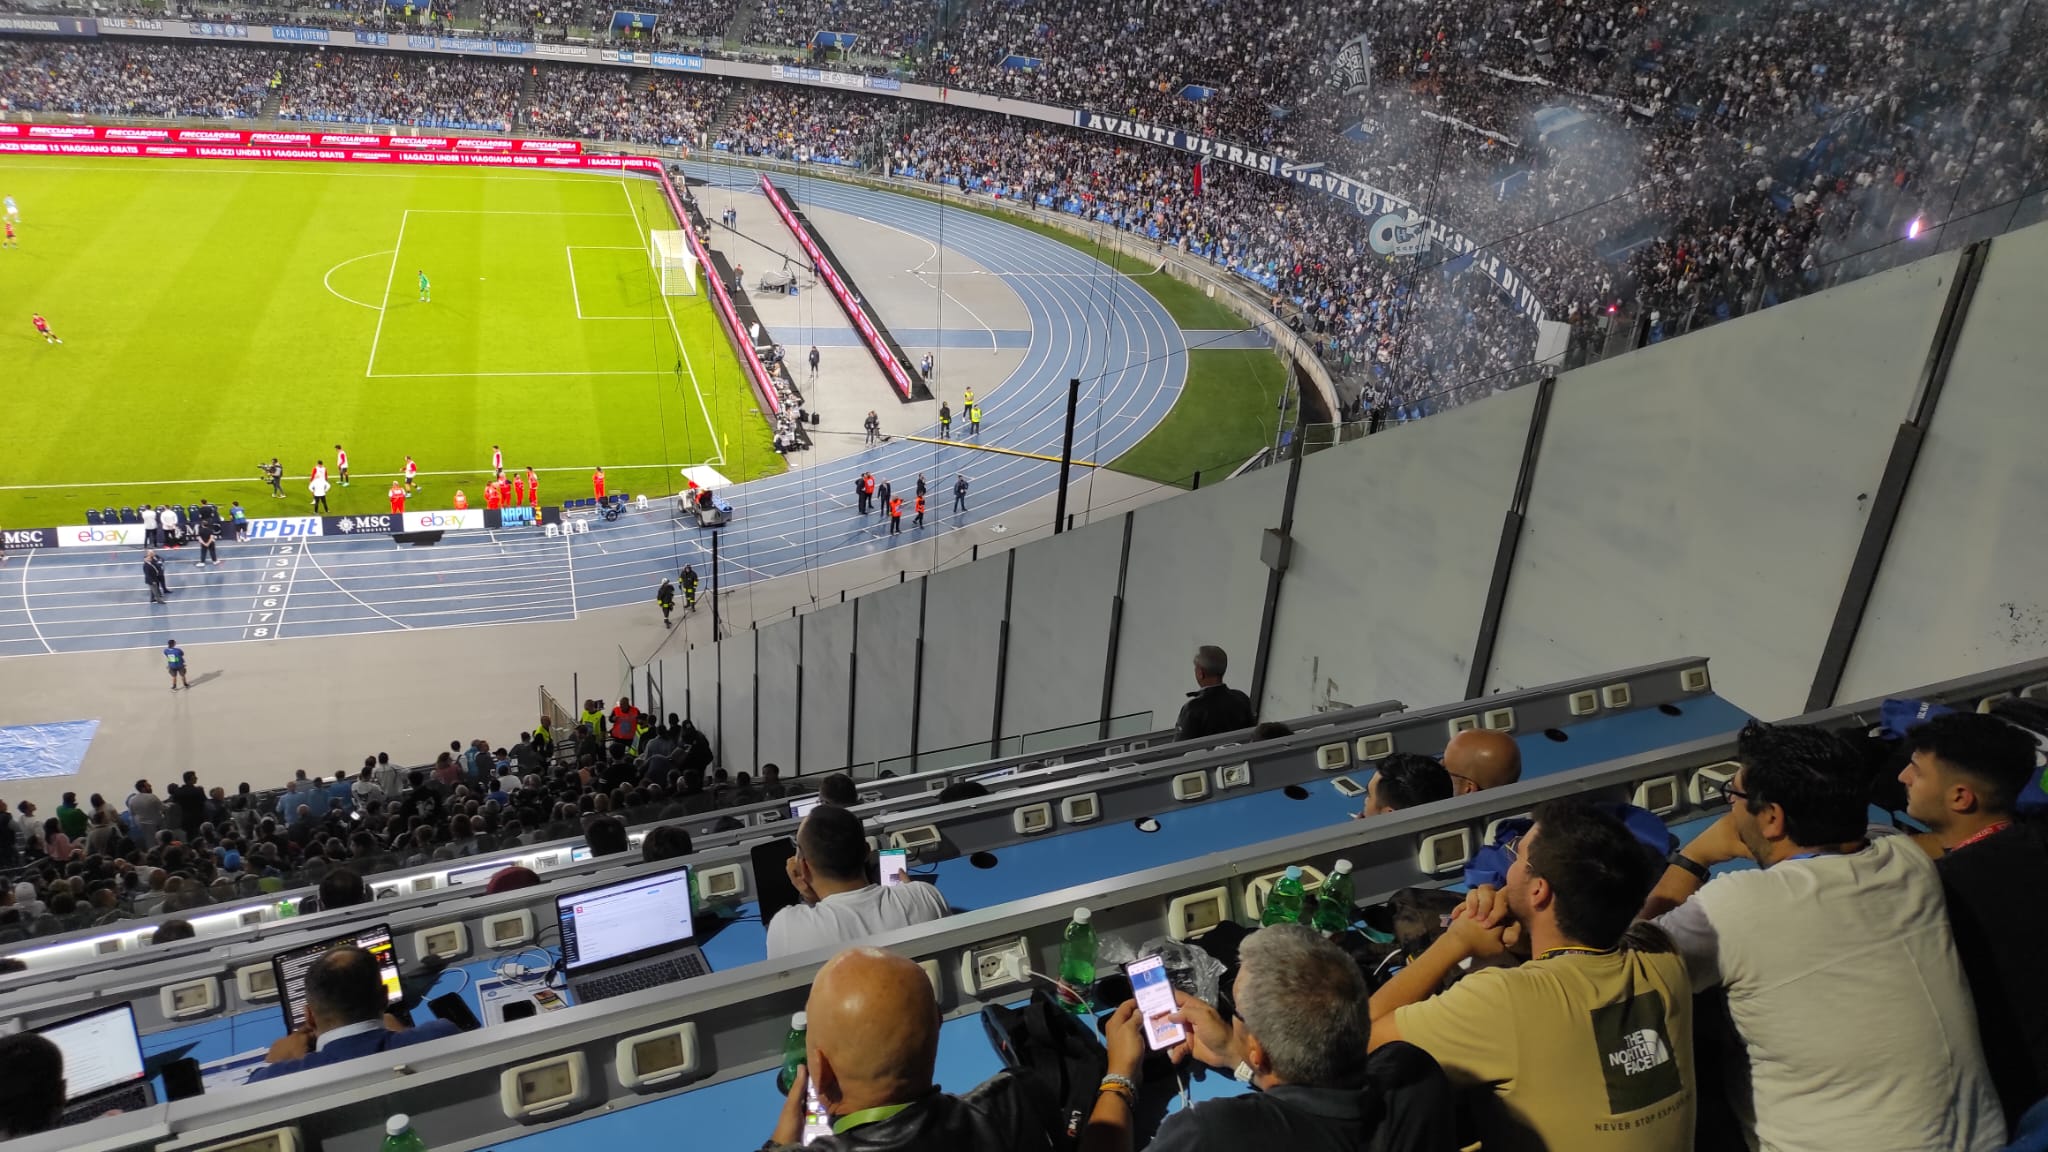 Napoli-Milan, panico al Maradona: lancio di bombe carta, petardi e fumogeni tra i tifosi